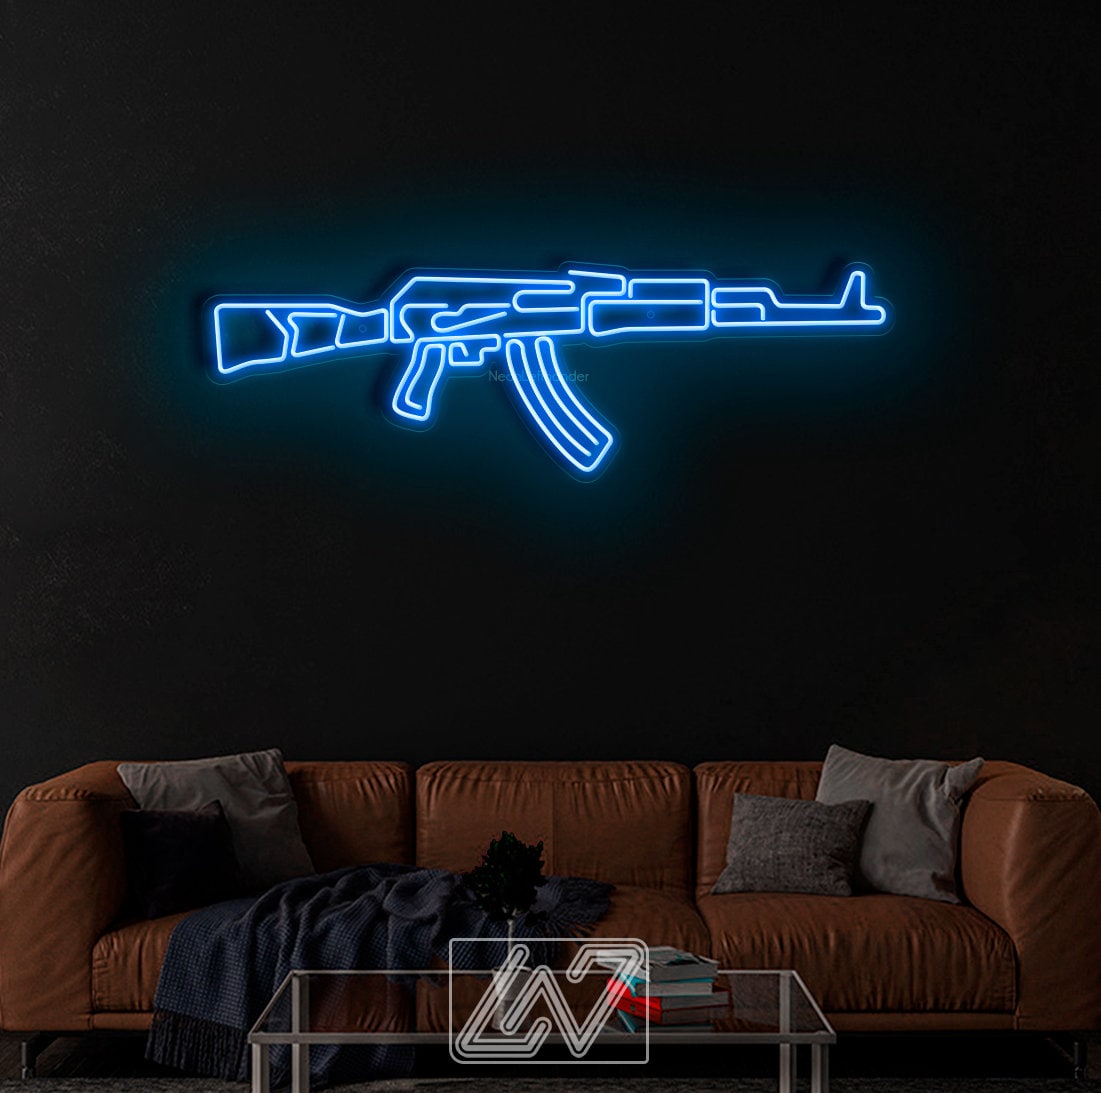 AK47 - LED Neon Sign, Interior Decor, Room decor, Wall Decor, Custom Sign, Neon For Home